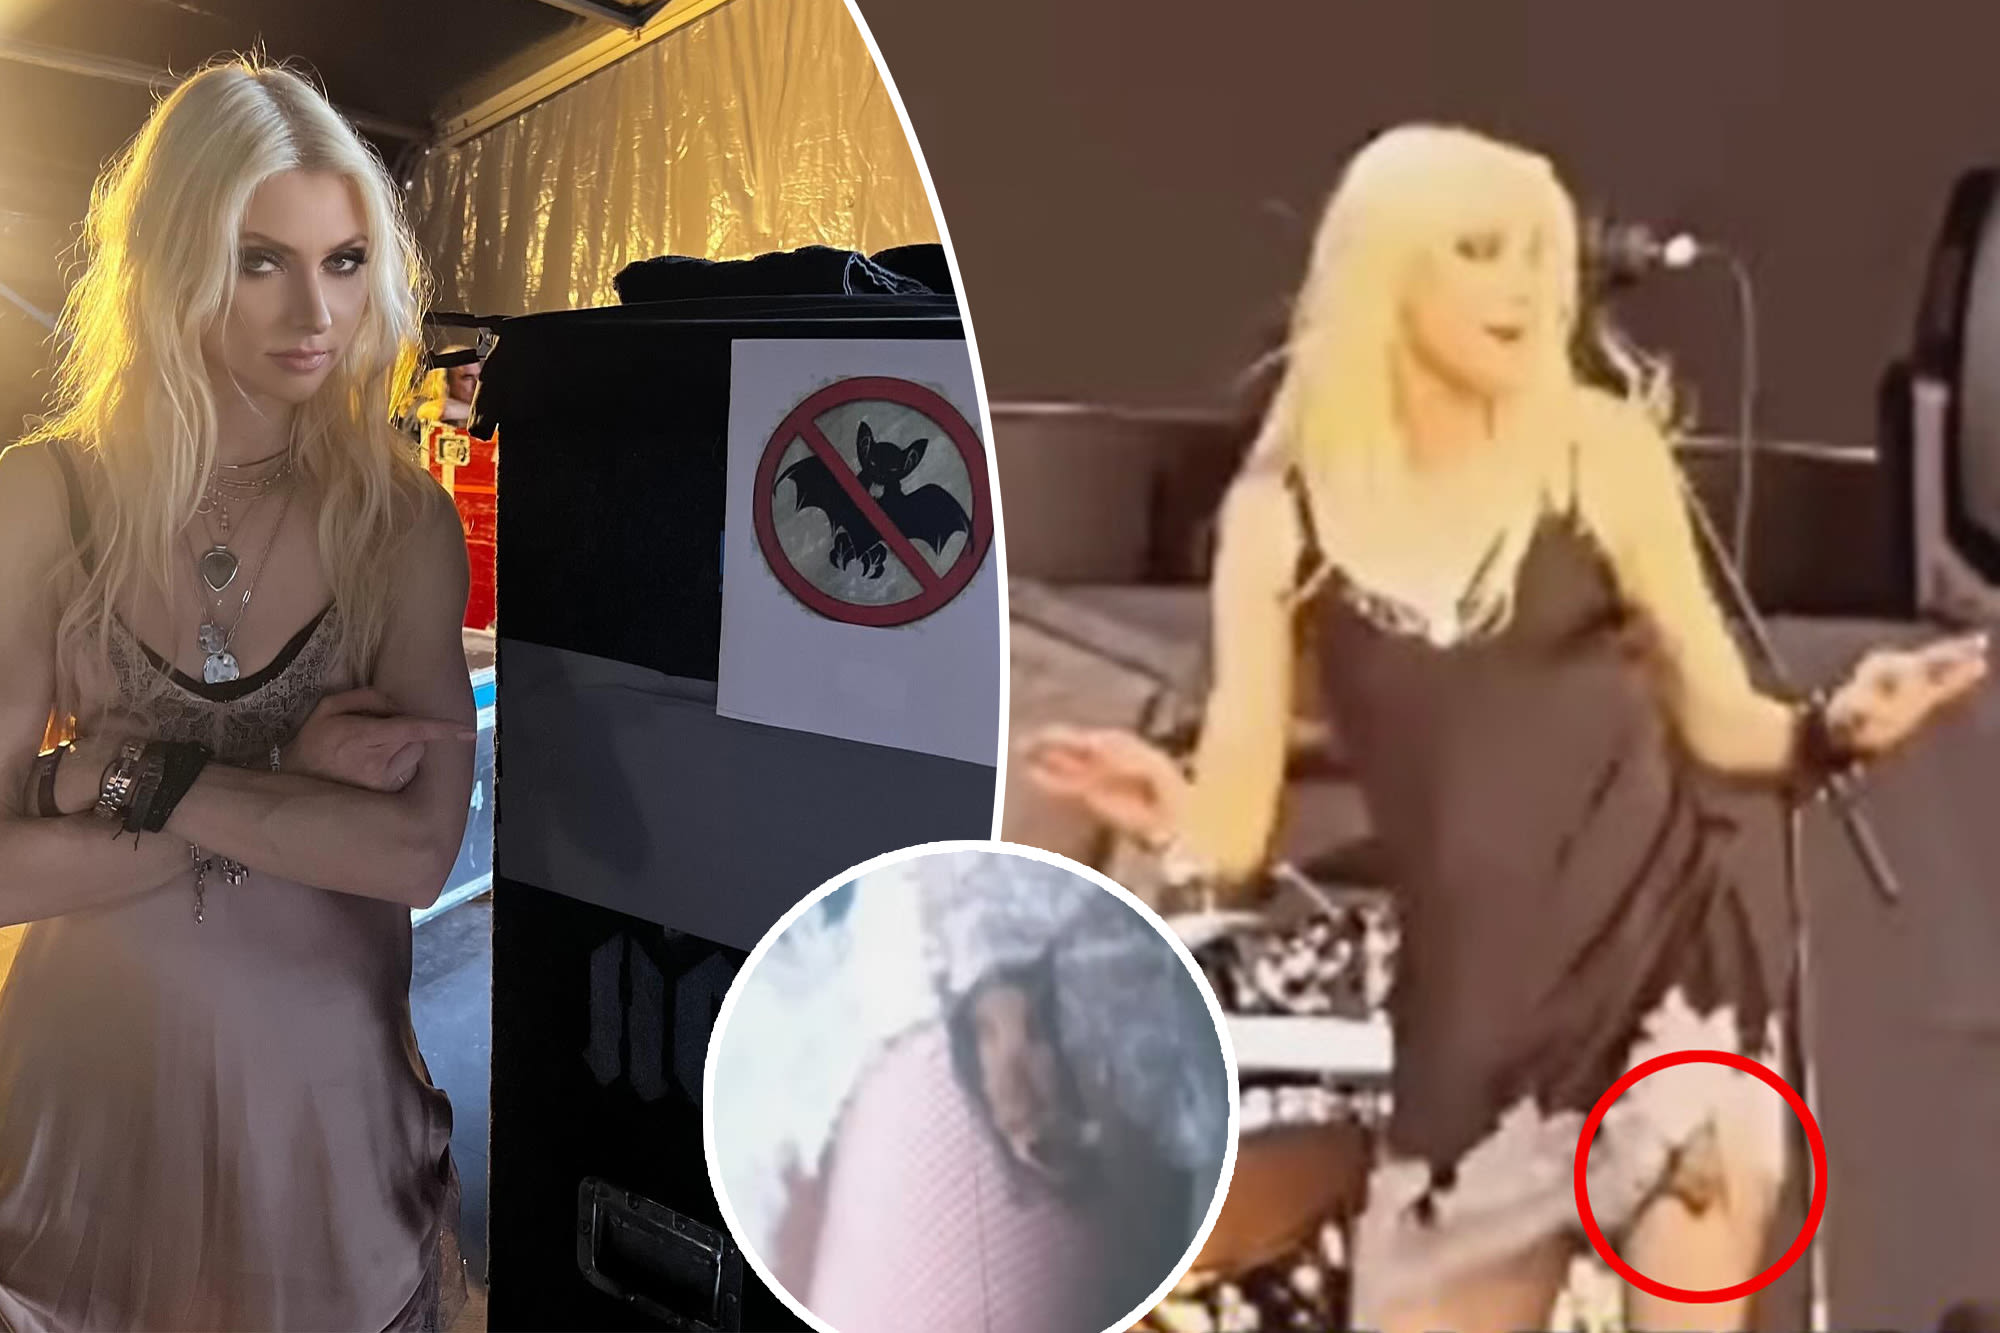 ‘Gossip Girl’ star Taylor Momsen gets bitten by a bat during concert, needs rabies shots